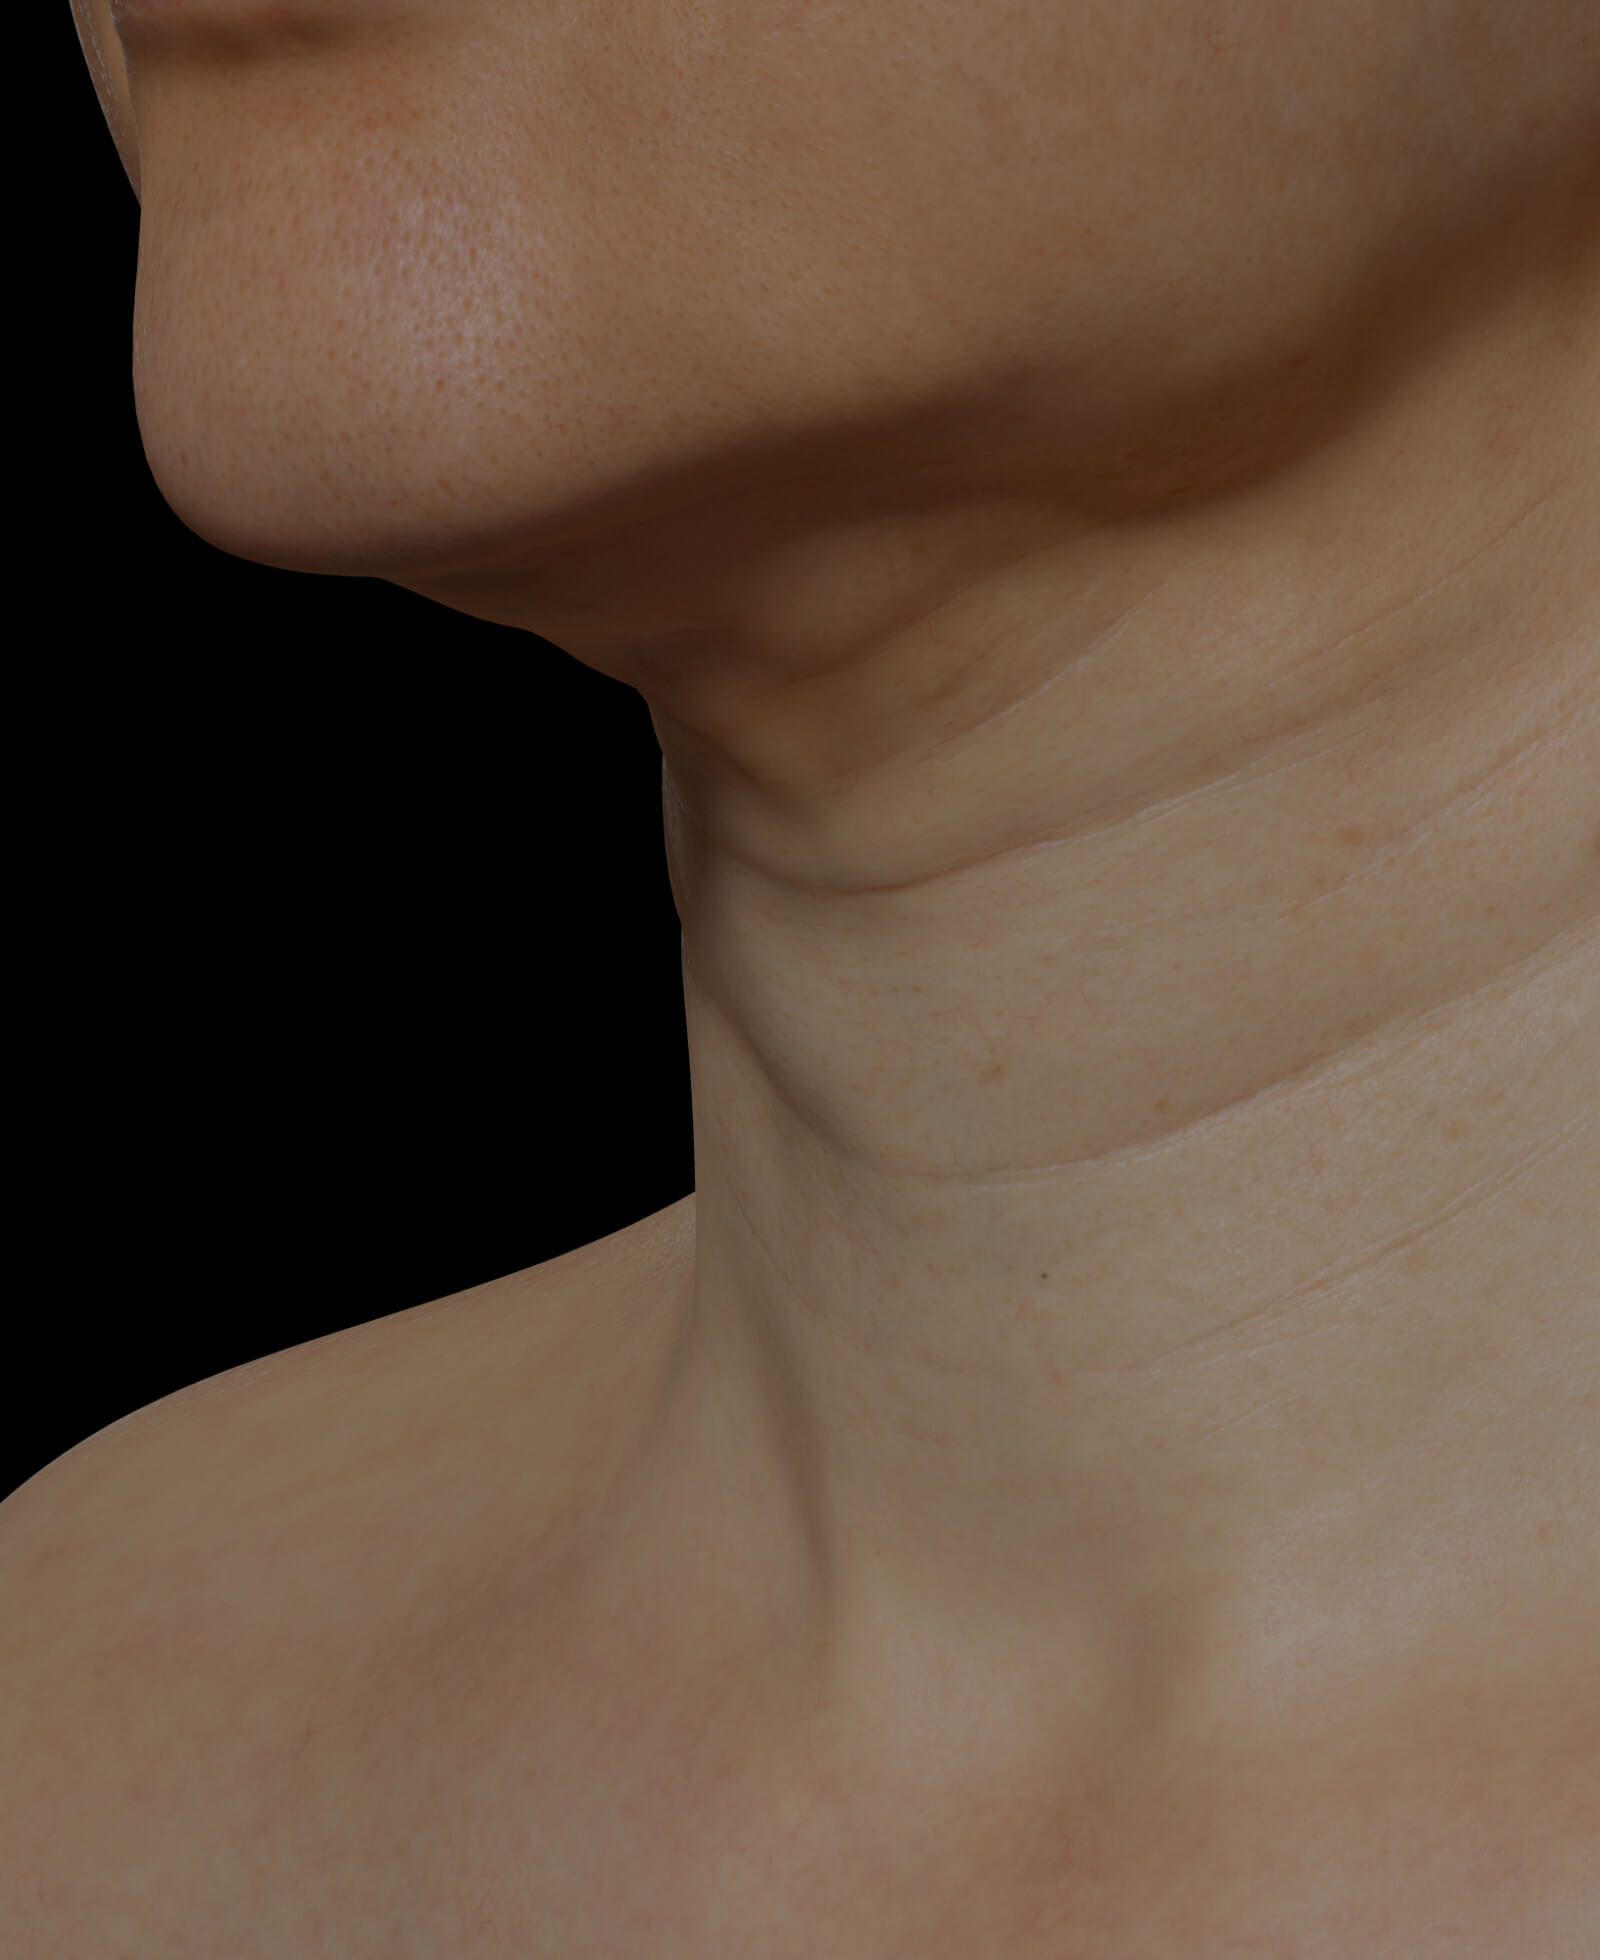 Neck of a Clinique Chloé female patient showing neck skin laxity